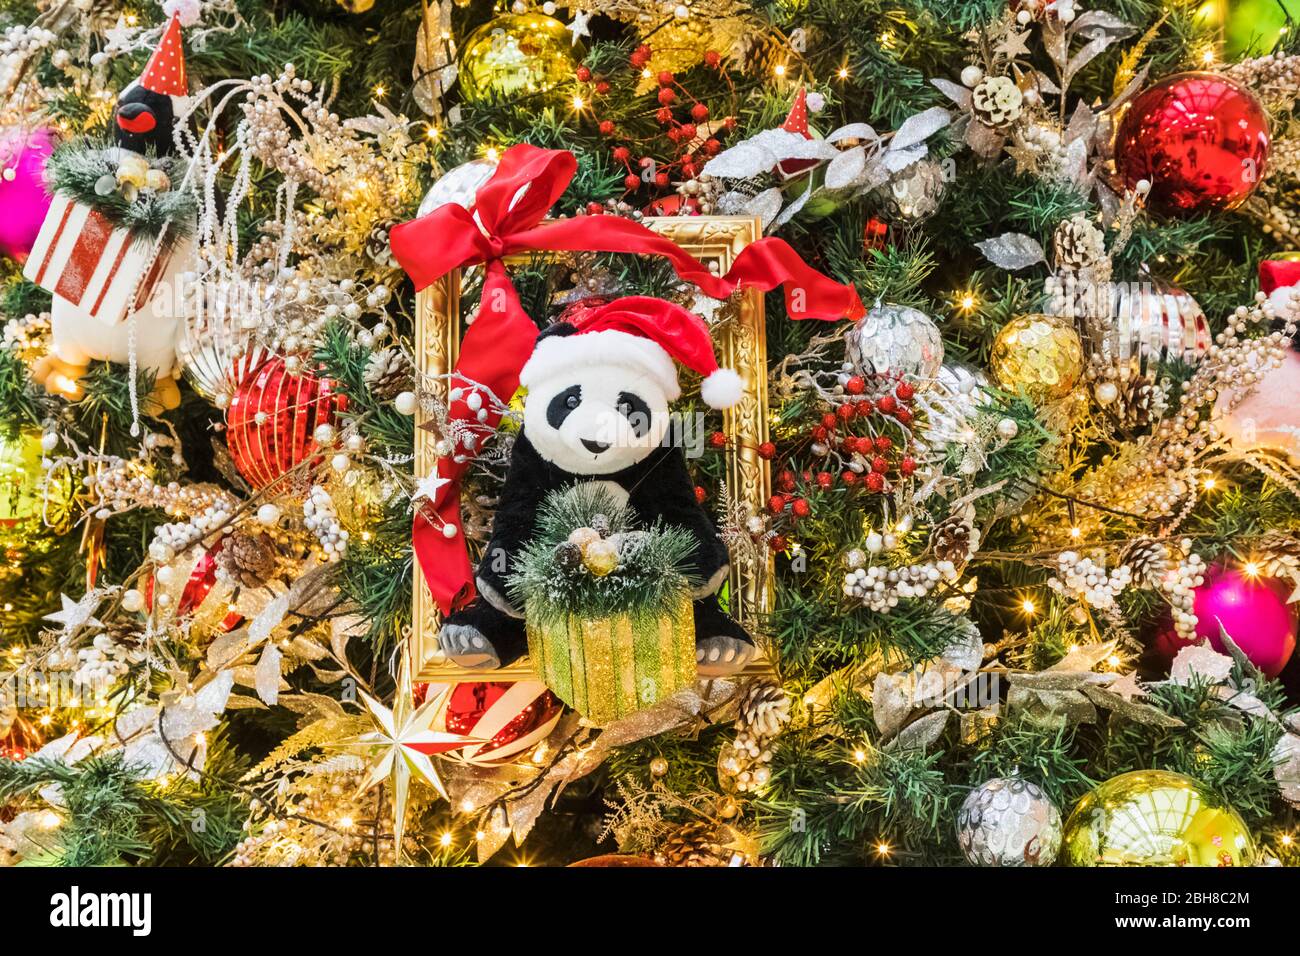 Japan, Honshu, Tokyo, Christmas Tree Decorations with Panda Stock Photo